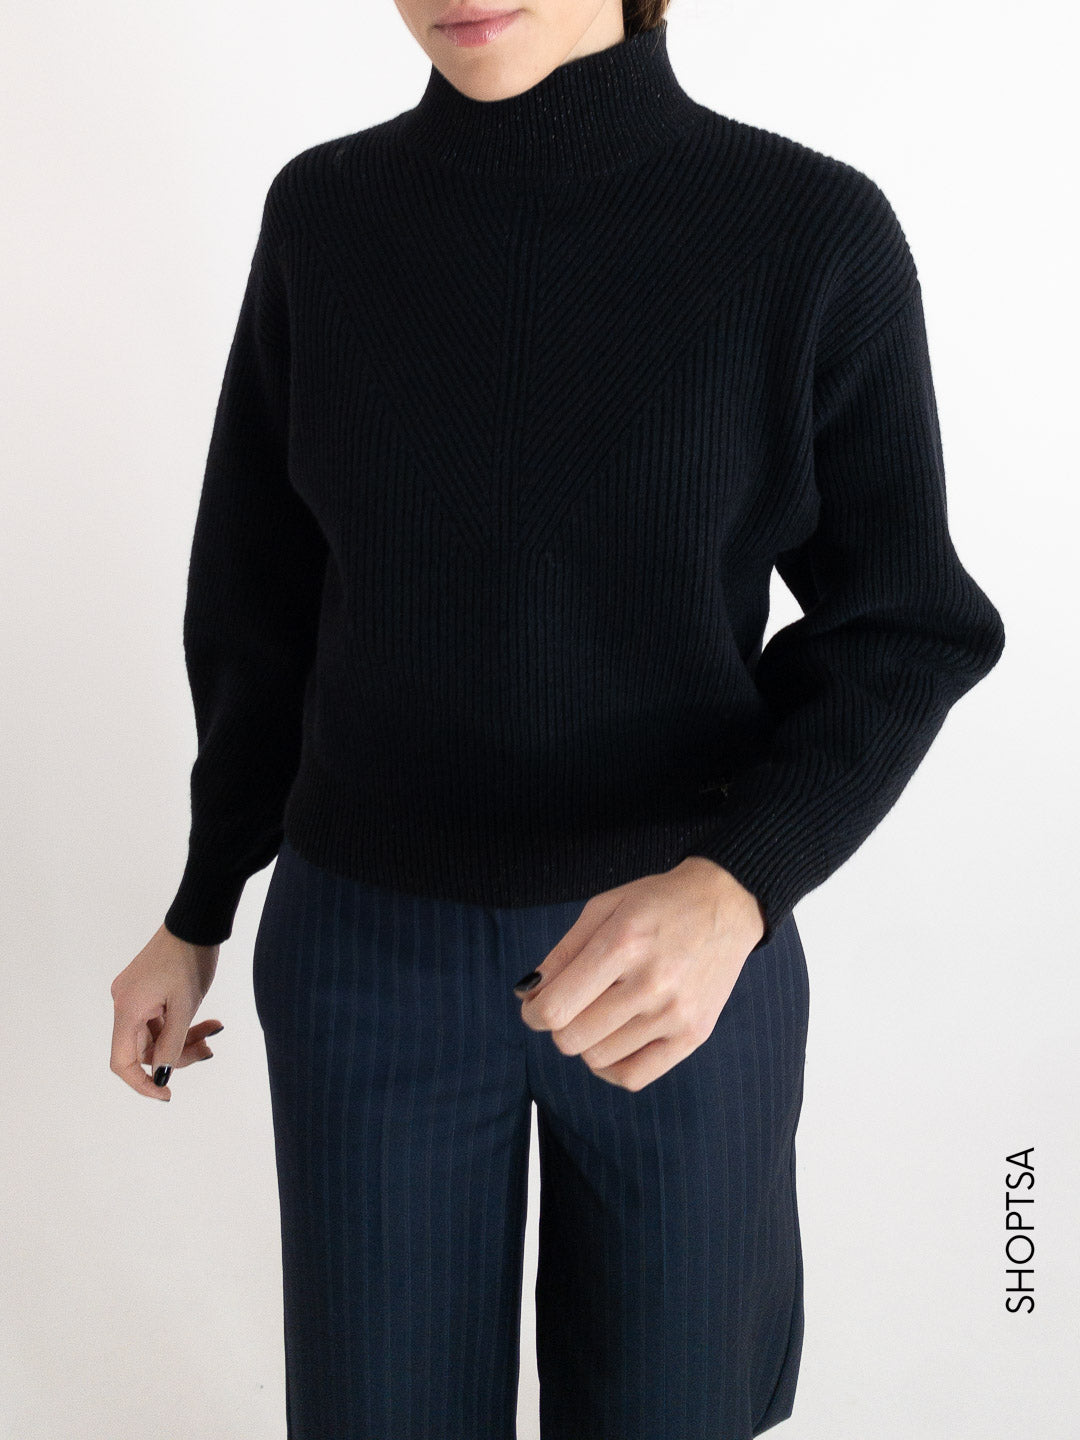 Sweater with lurex details - GAUDì